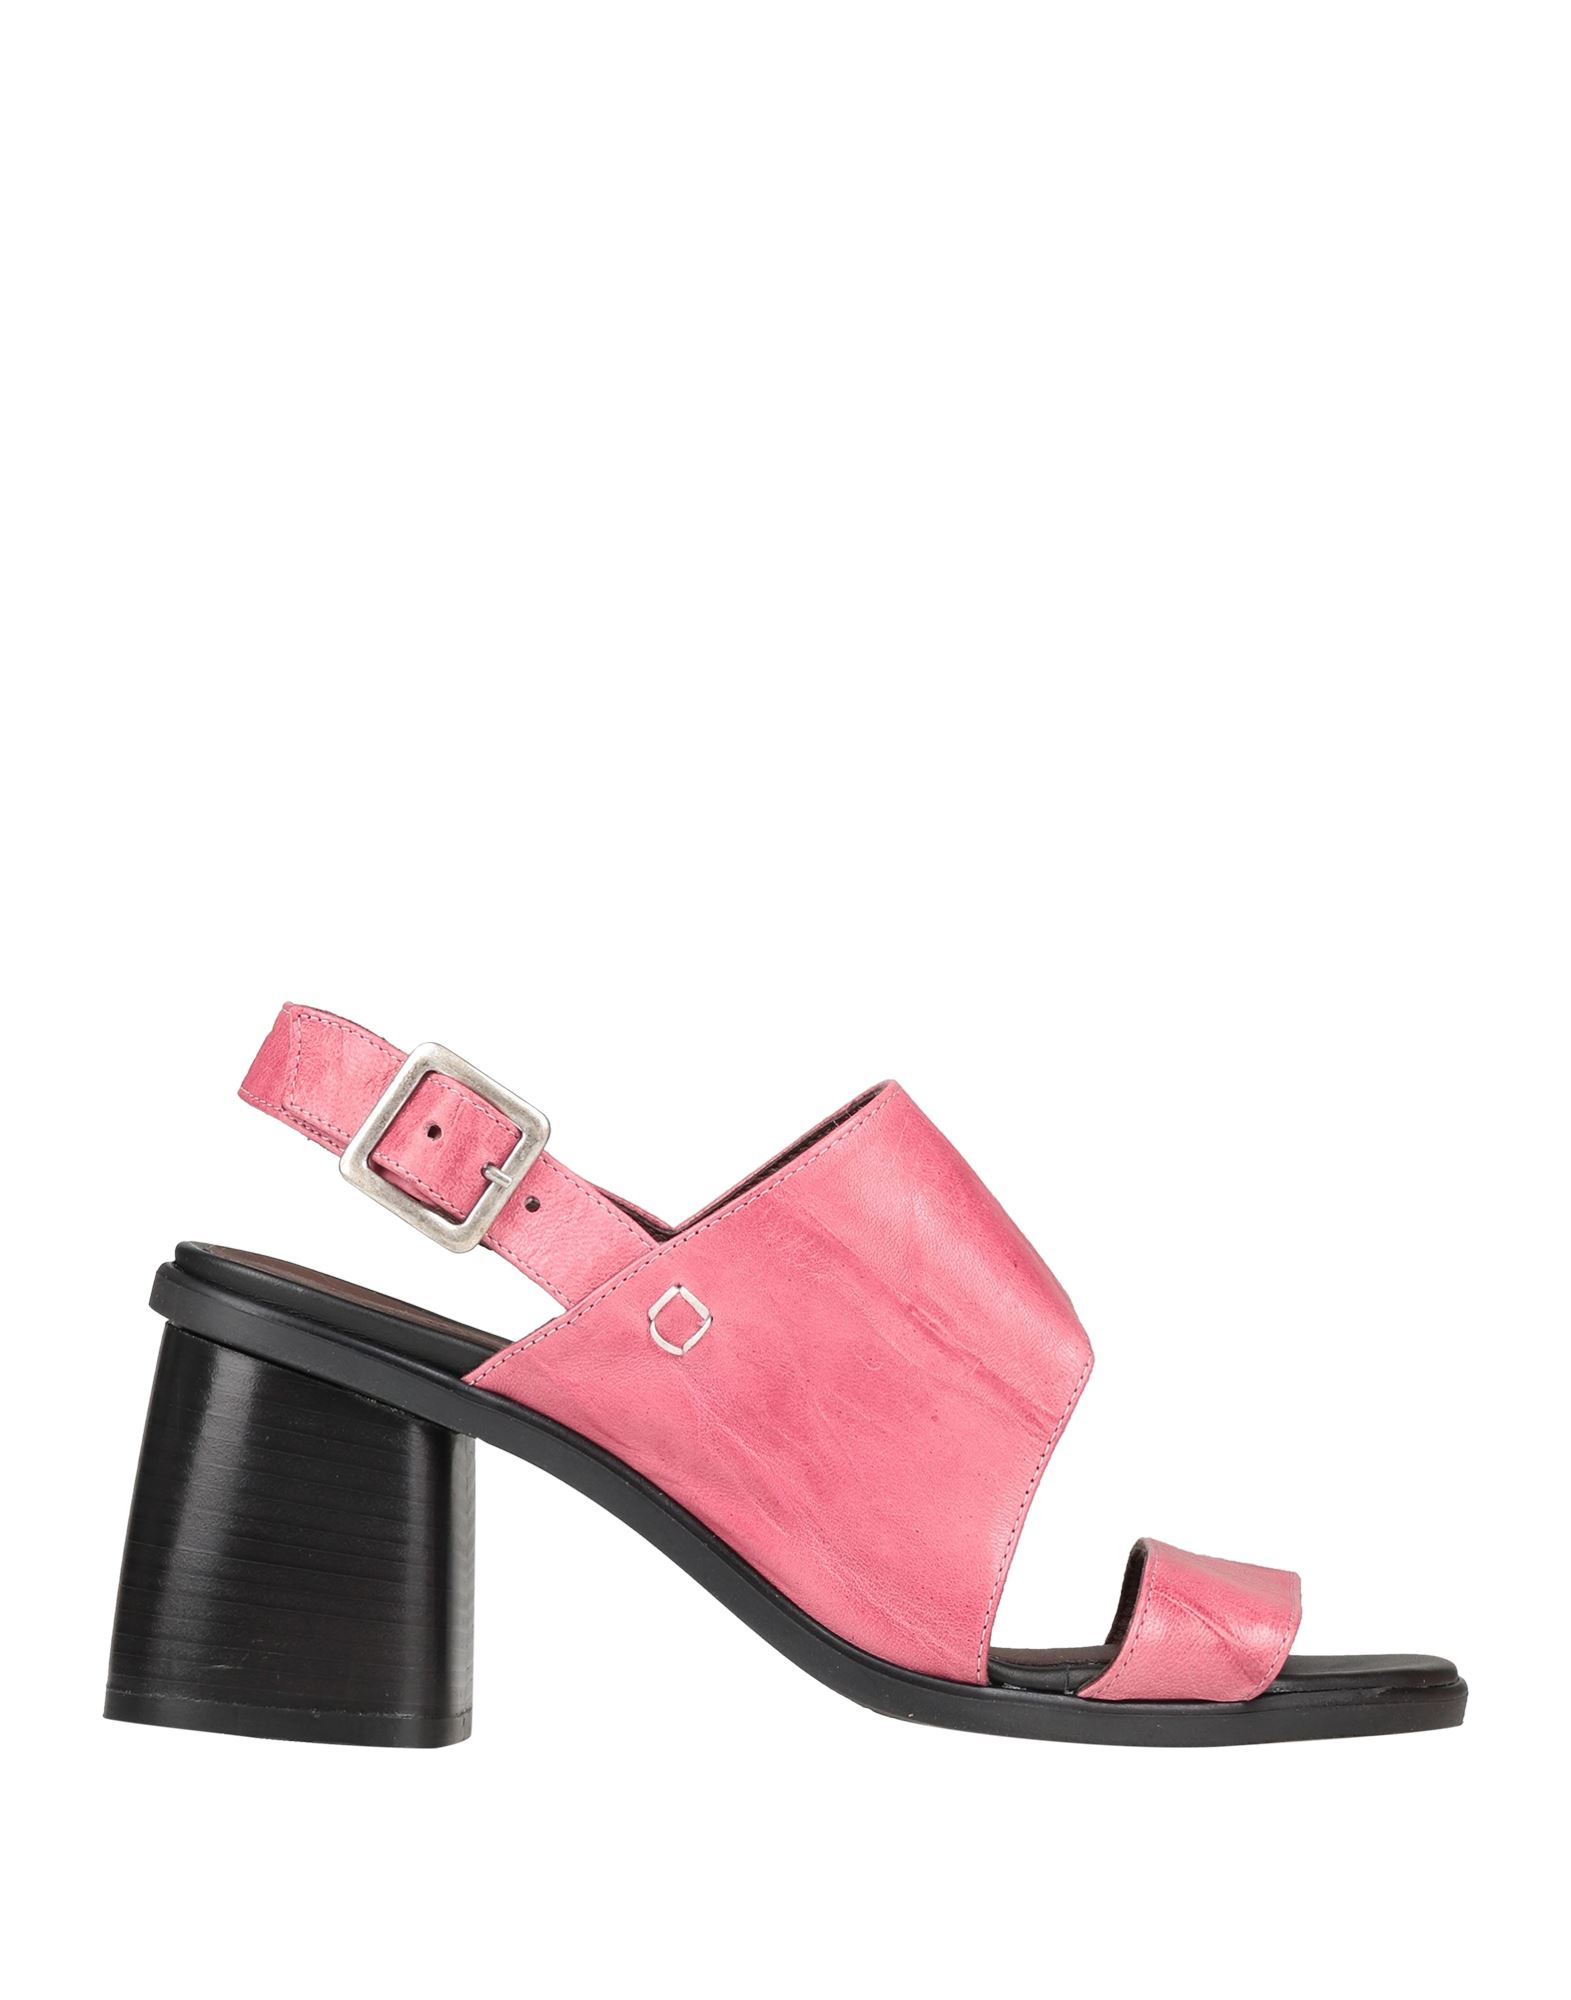 Collection Privèe Collection Privēe? Woman Sandals Pastel Pink Size 8 Soft Leather